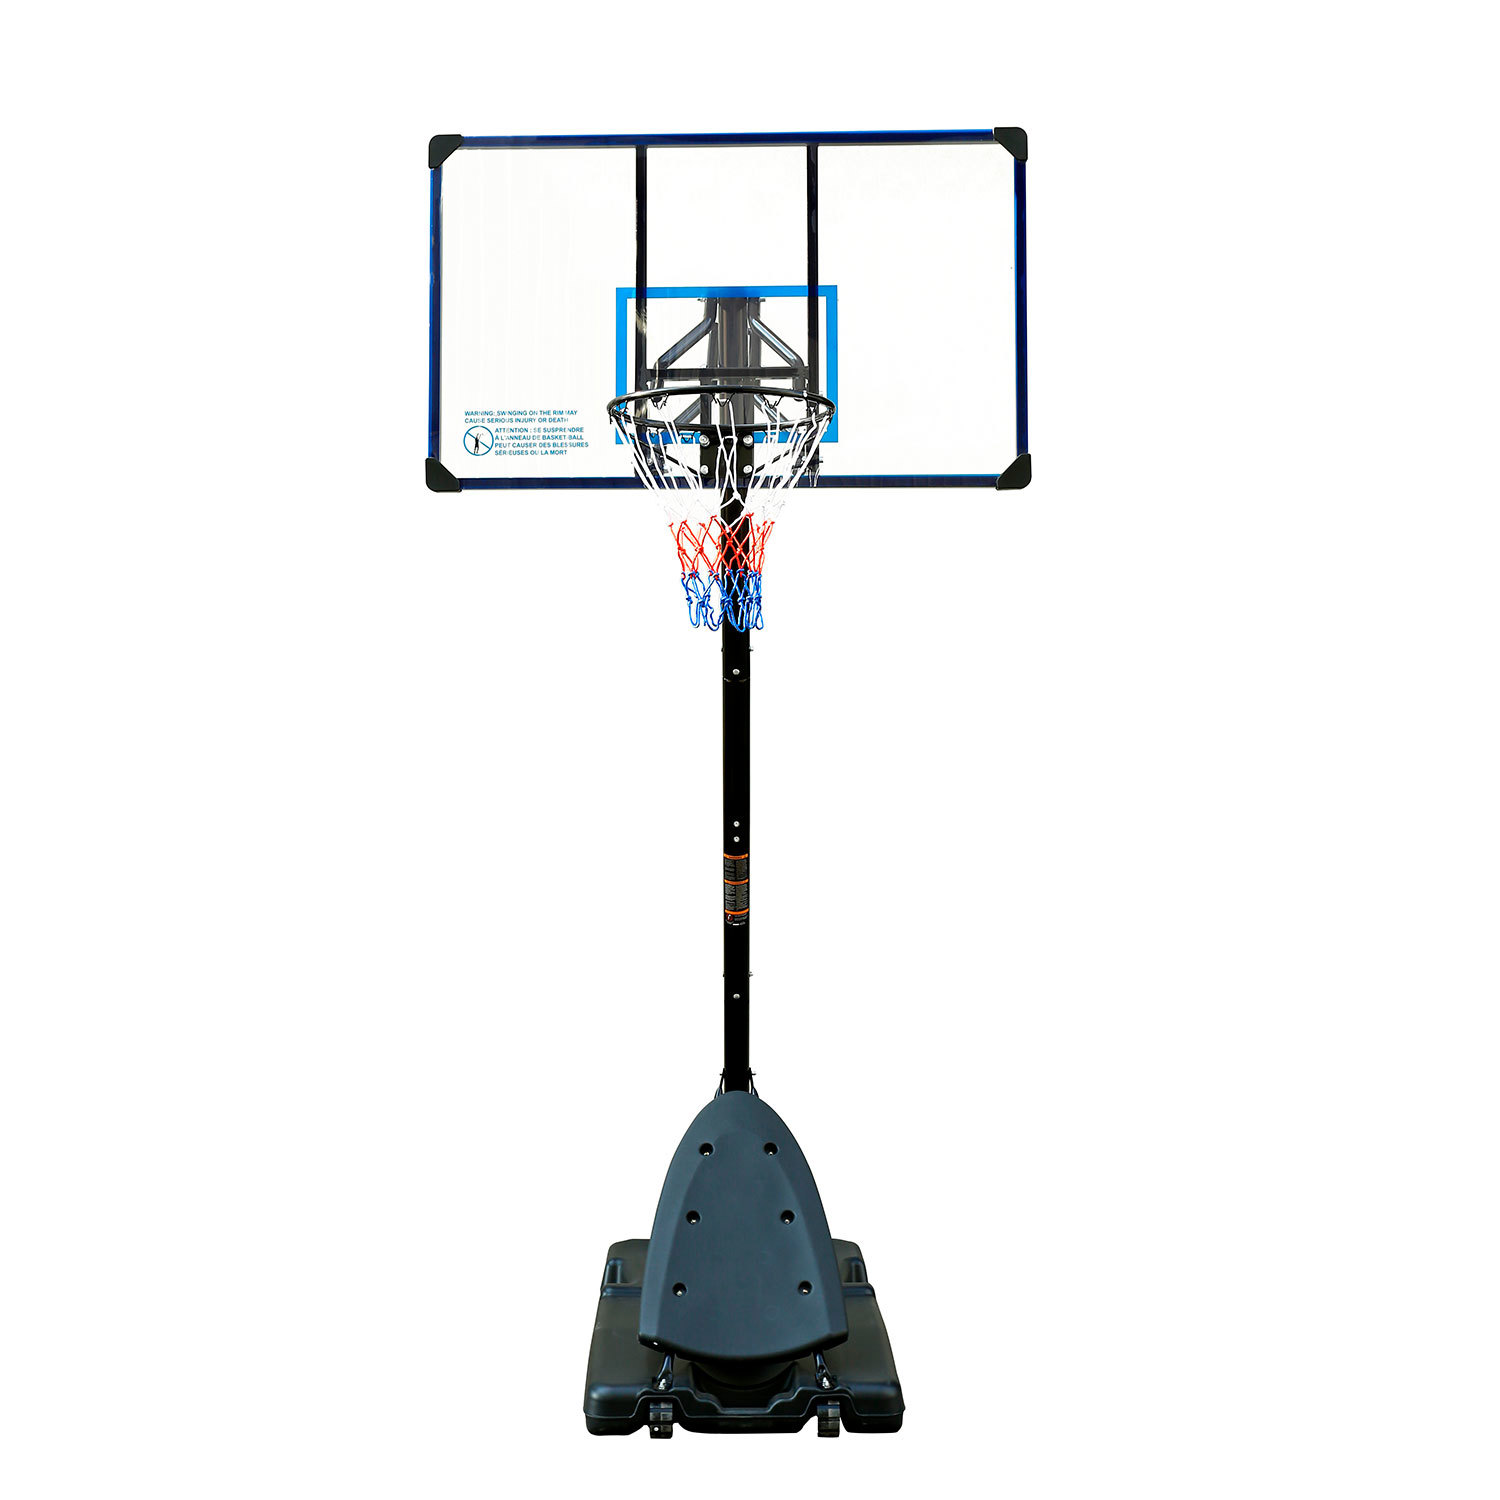 90485386 Баскетбольная мобильная стойка STAND54KLB STLM-0246653 DFC